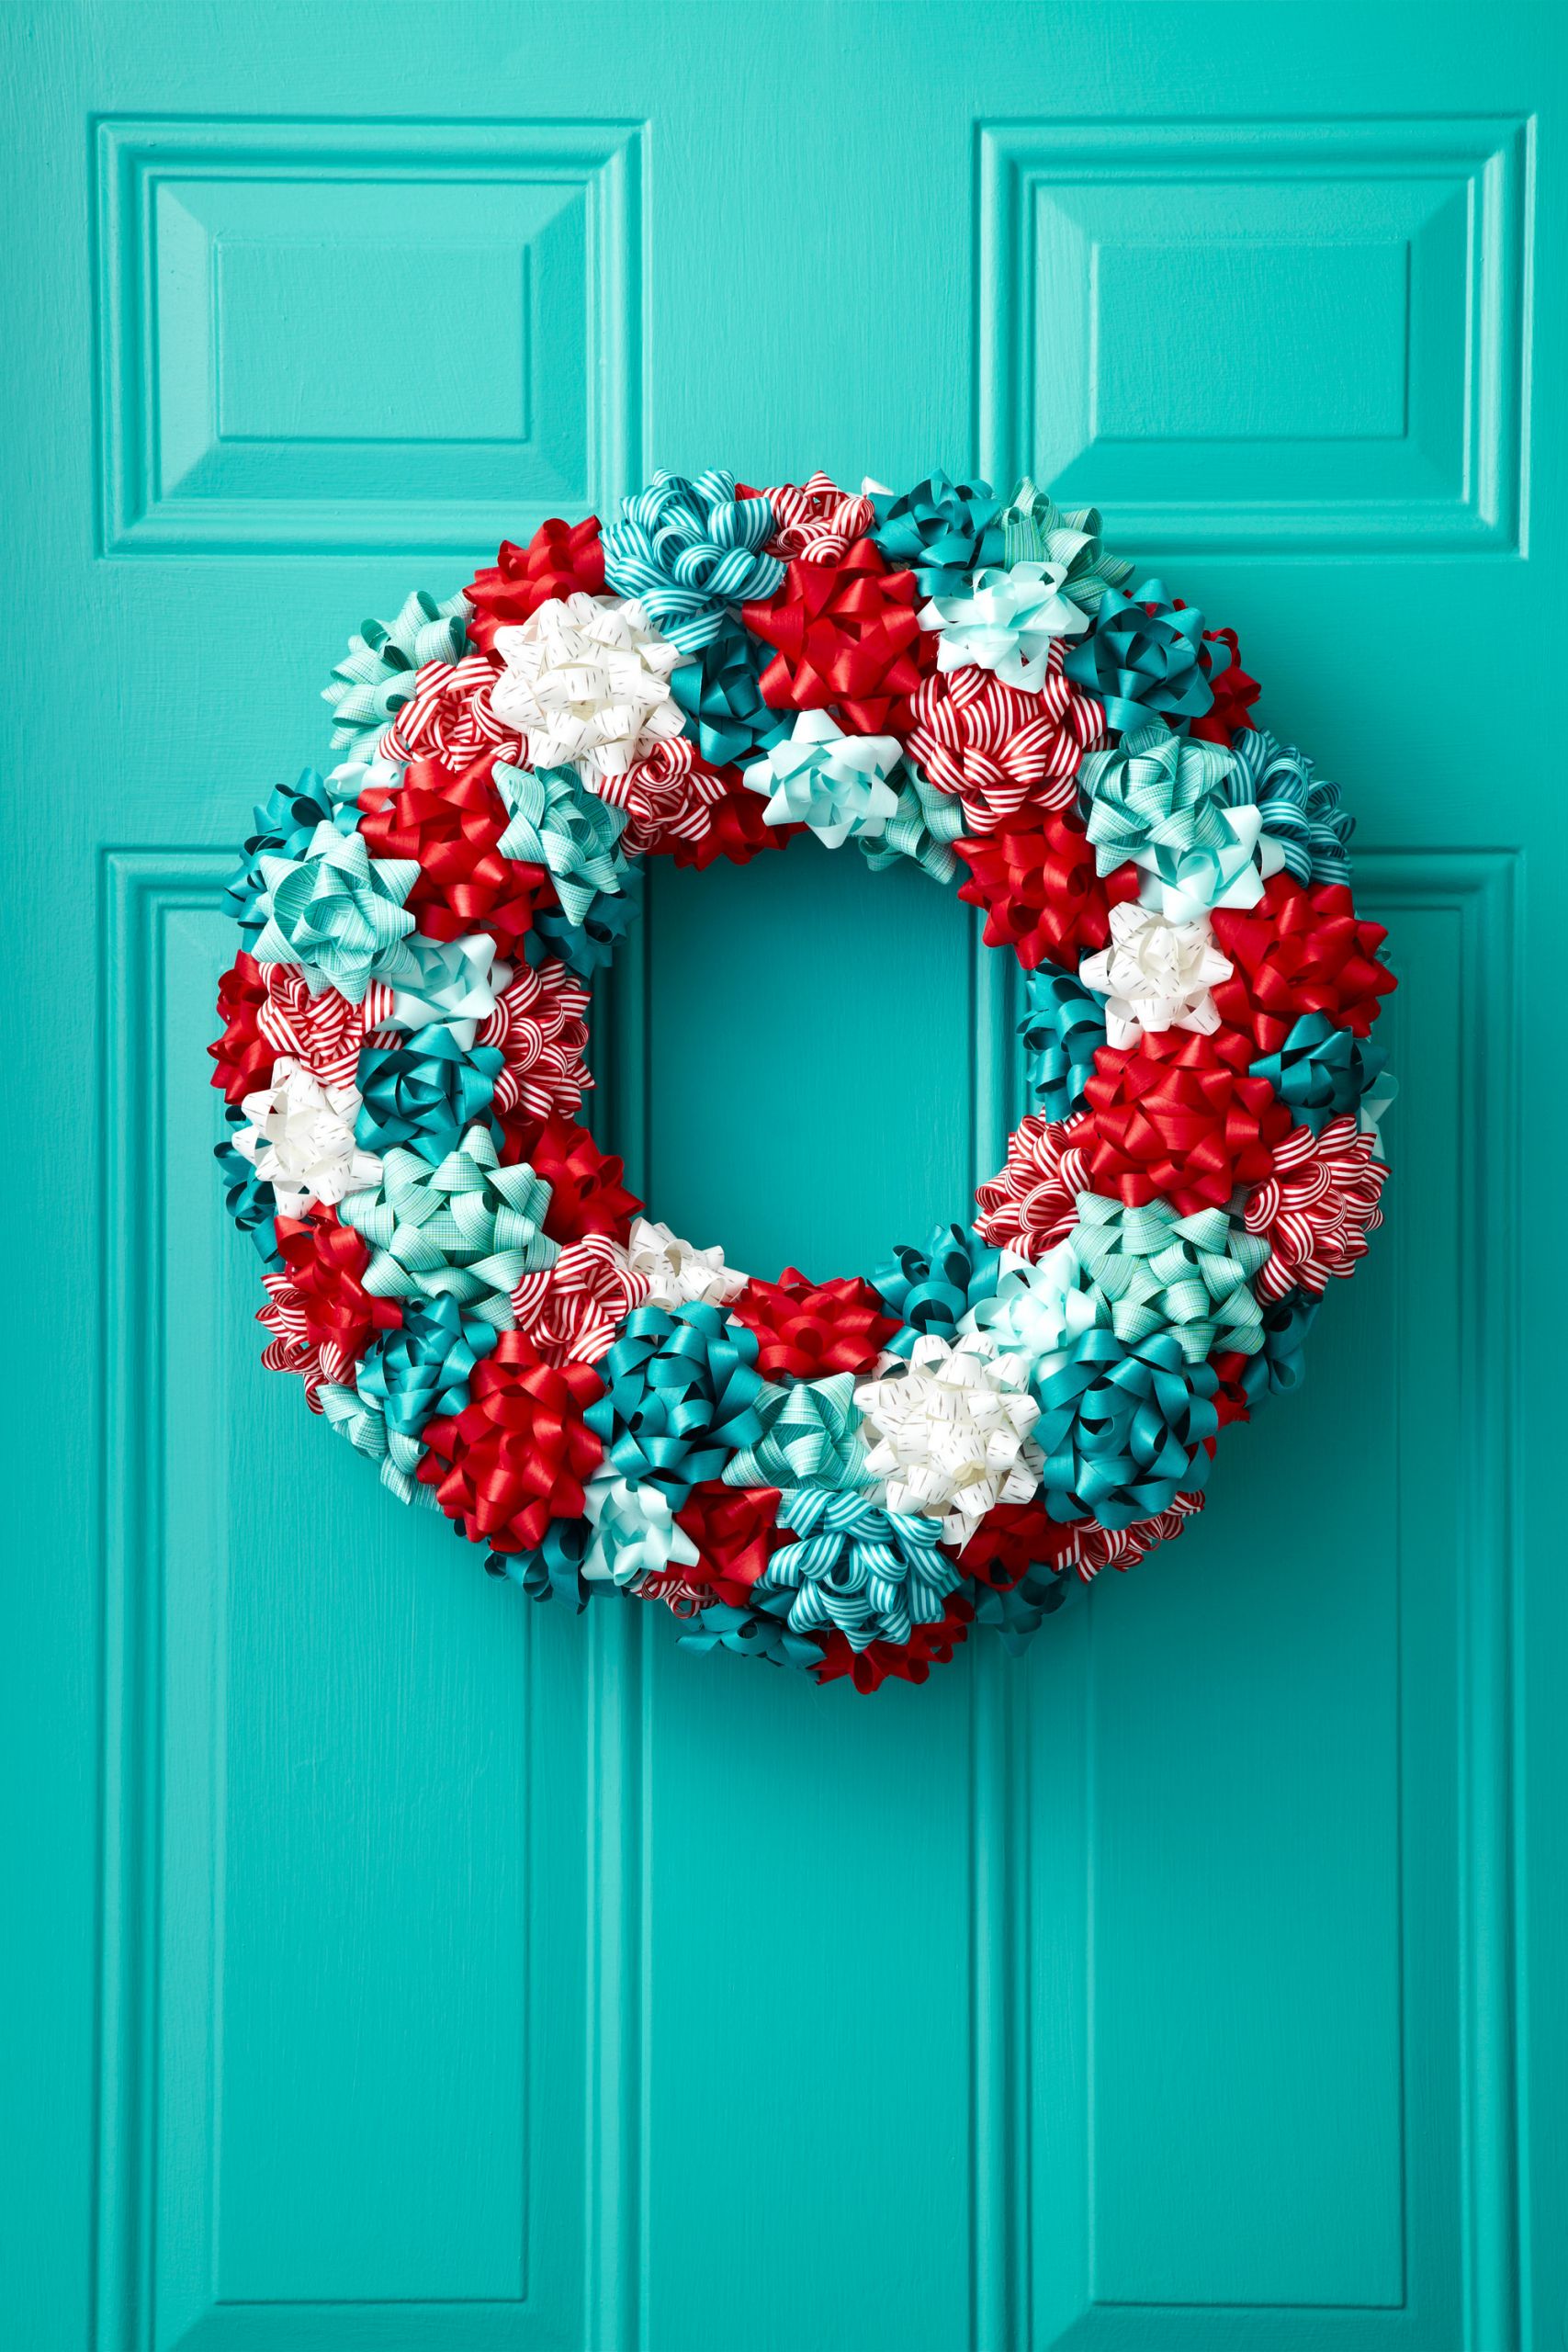 DIY Holiday Decorations Ideas
 39 Easy DIY Christmas Decorations Homemade Ideas for